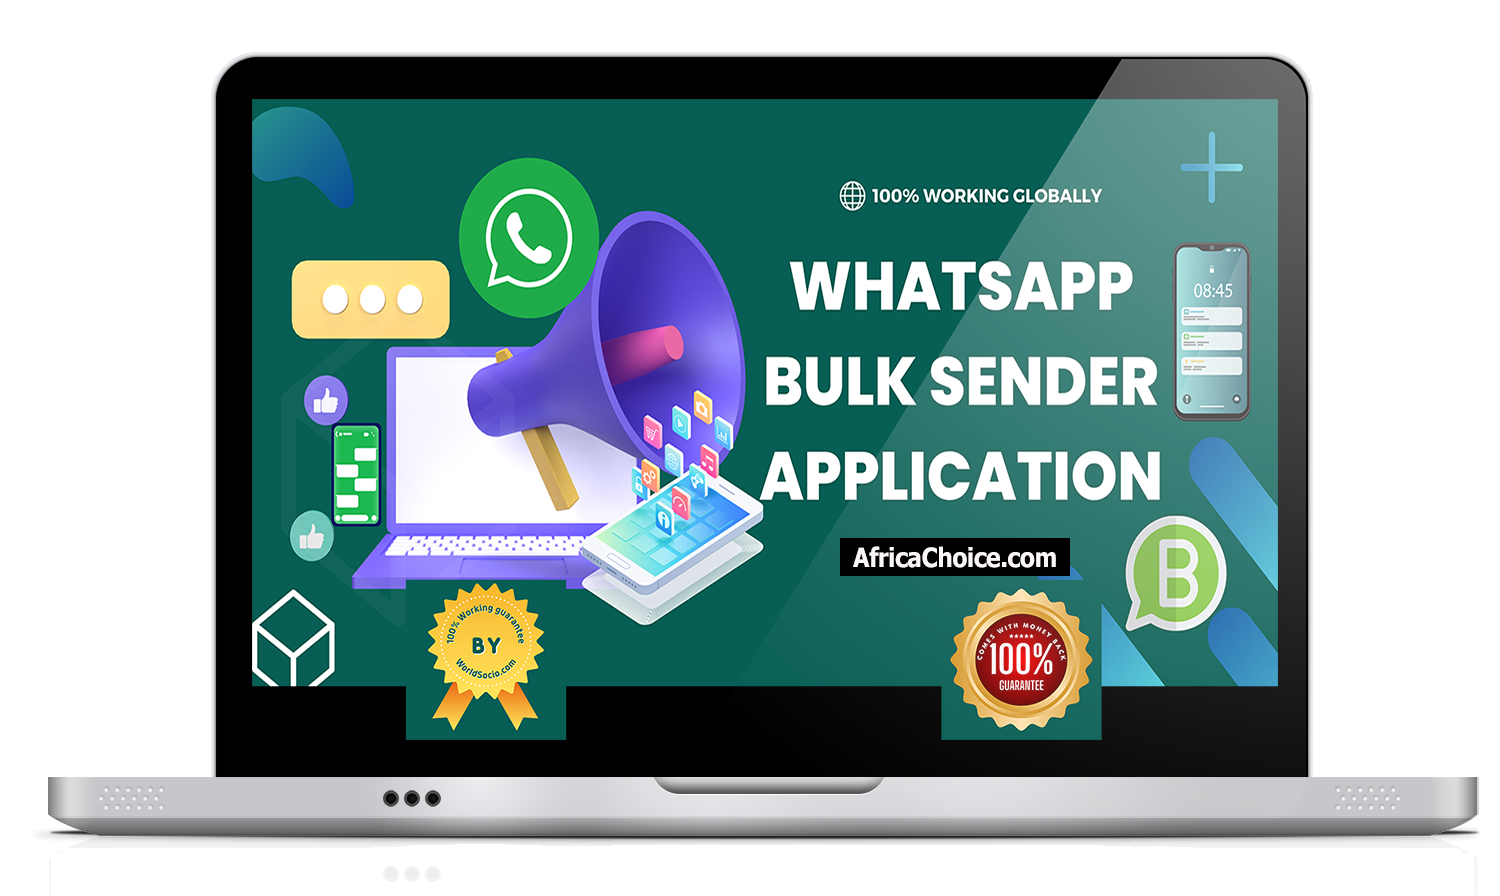 whatsapp-bulk-sender-application-africachoice-png.1577